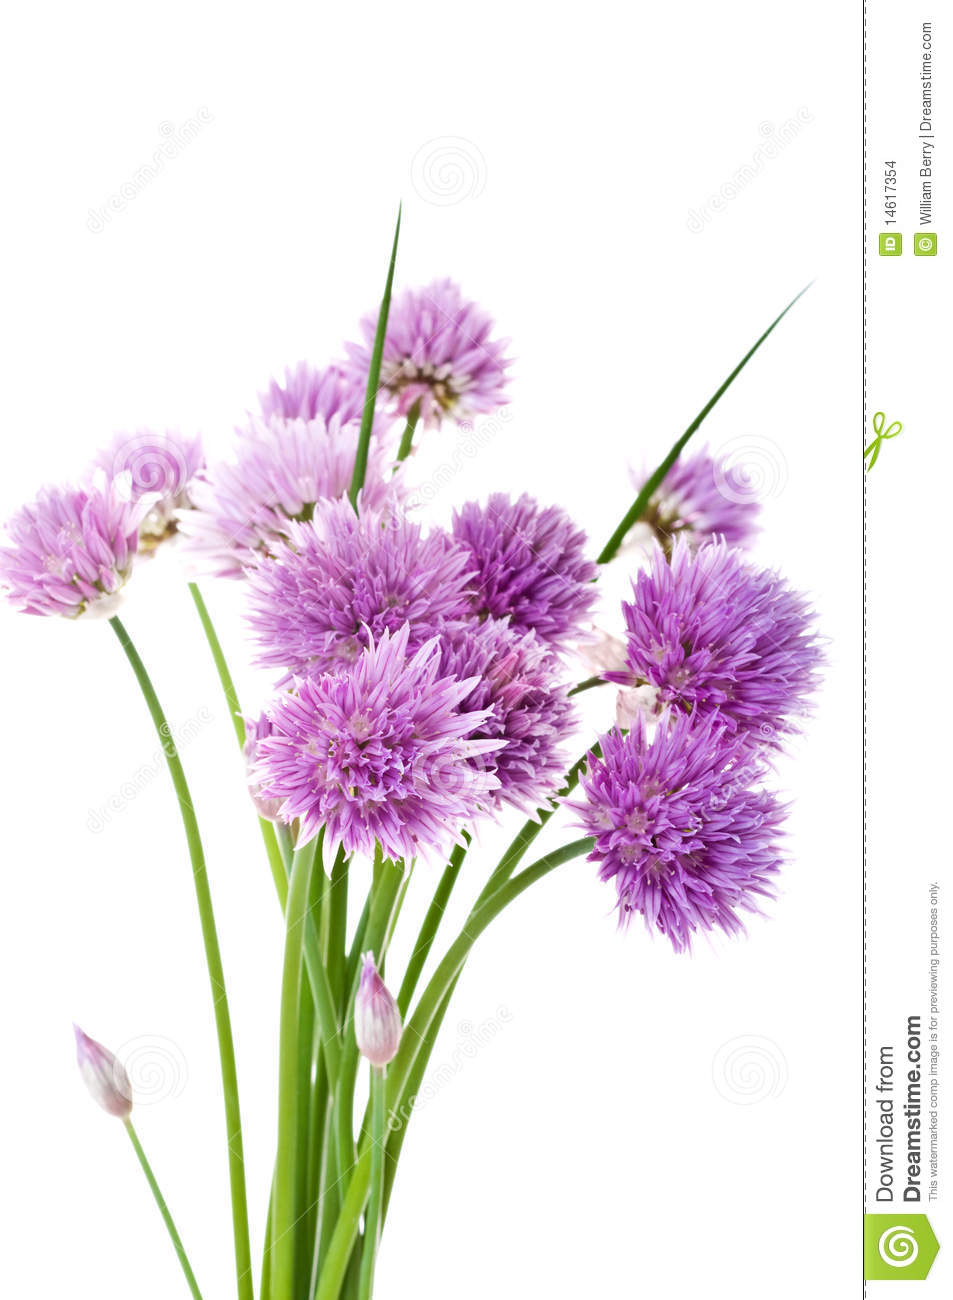 Fresh Chives  Allium Schoenoprasum  Stock Images   Image  14617354